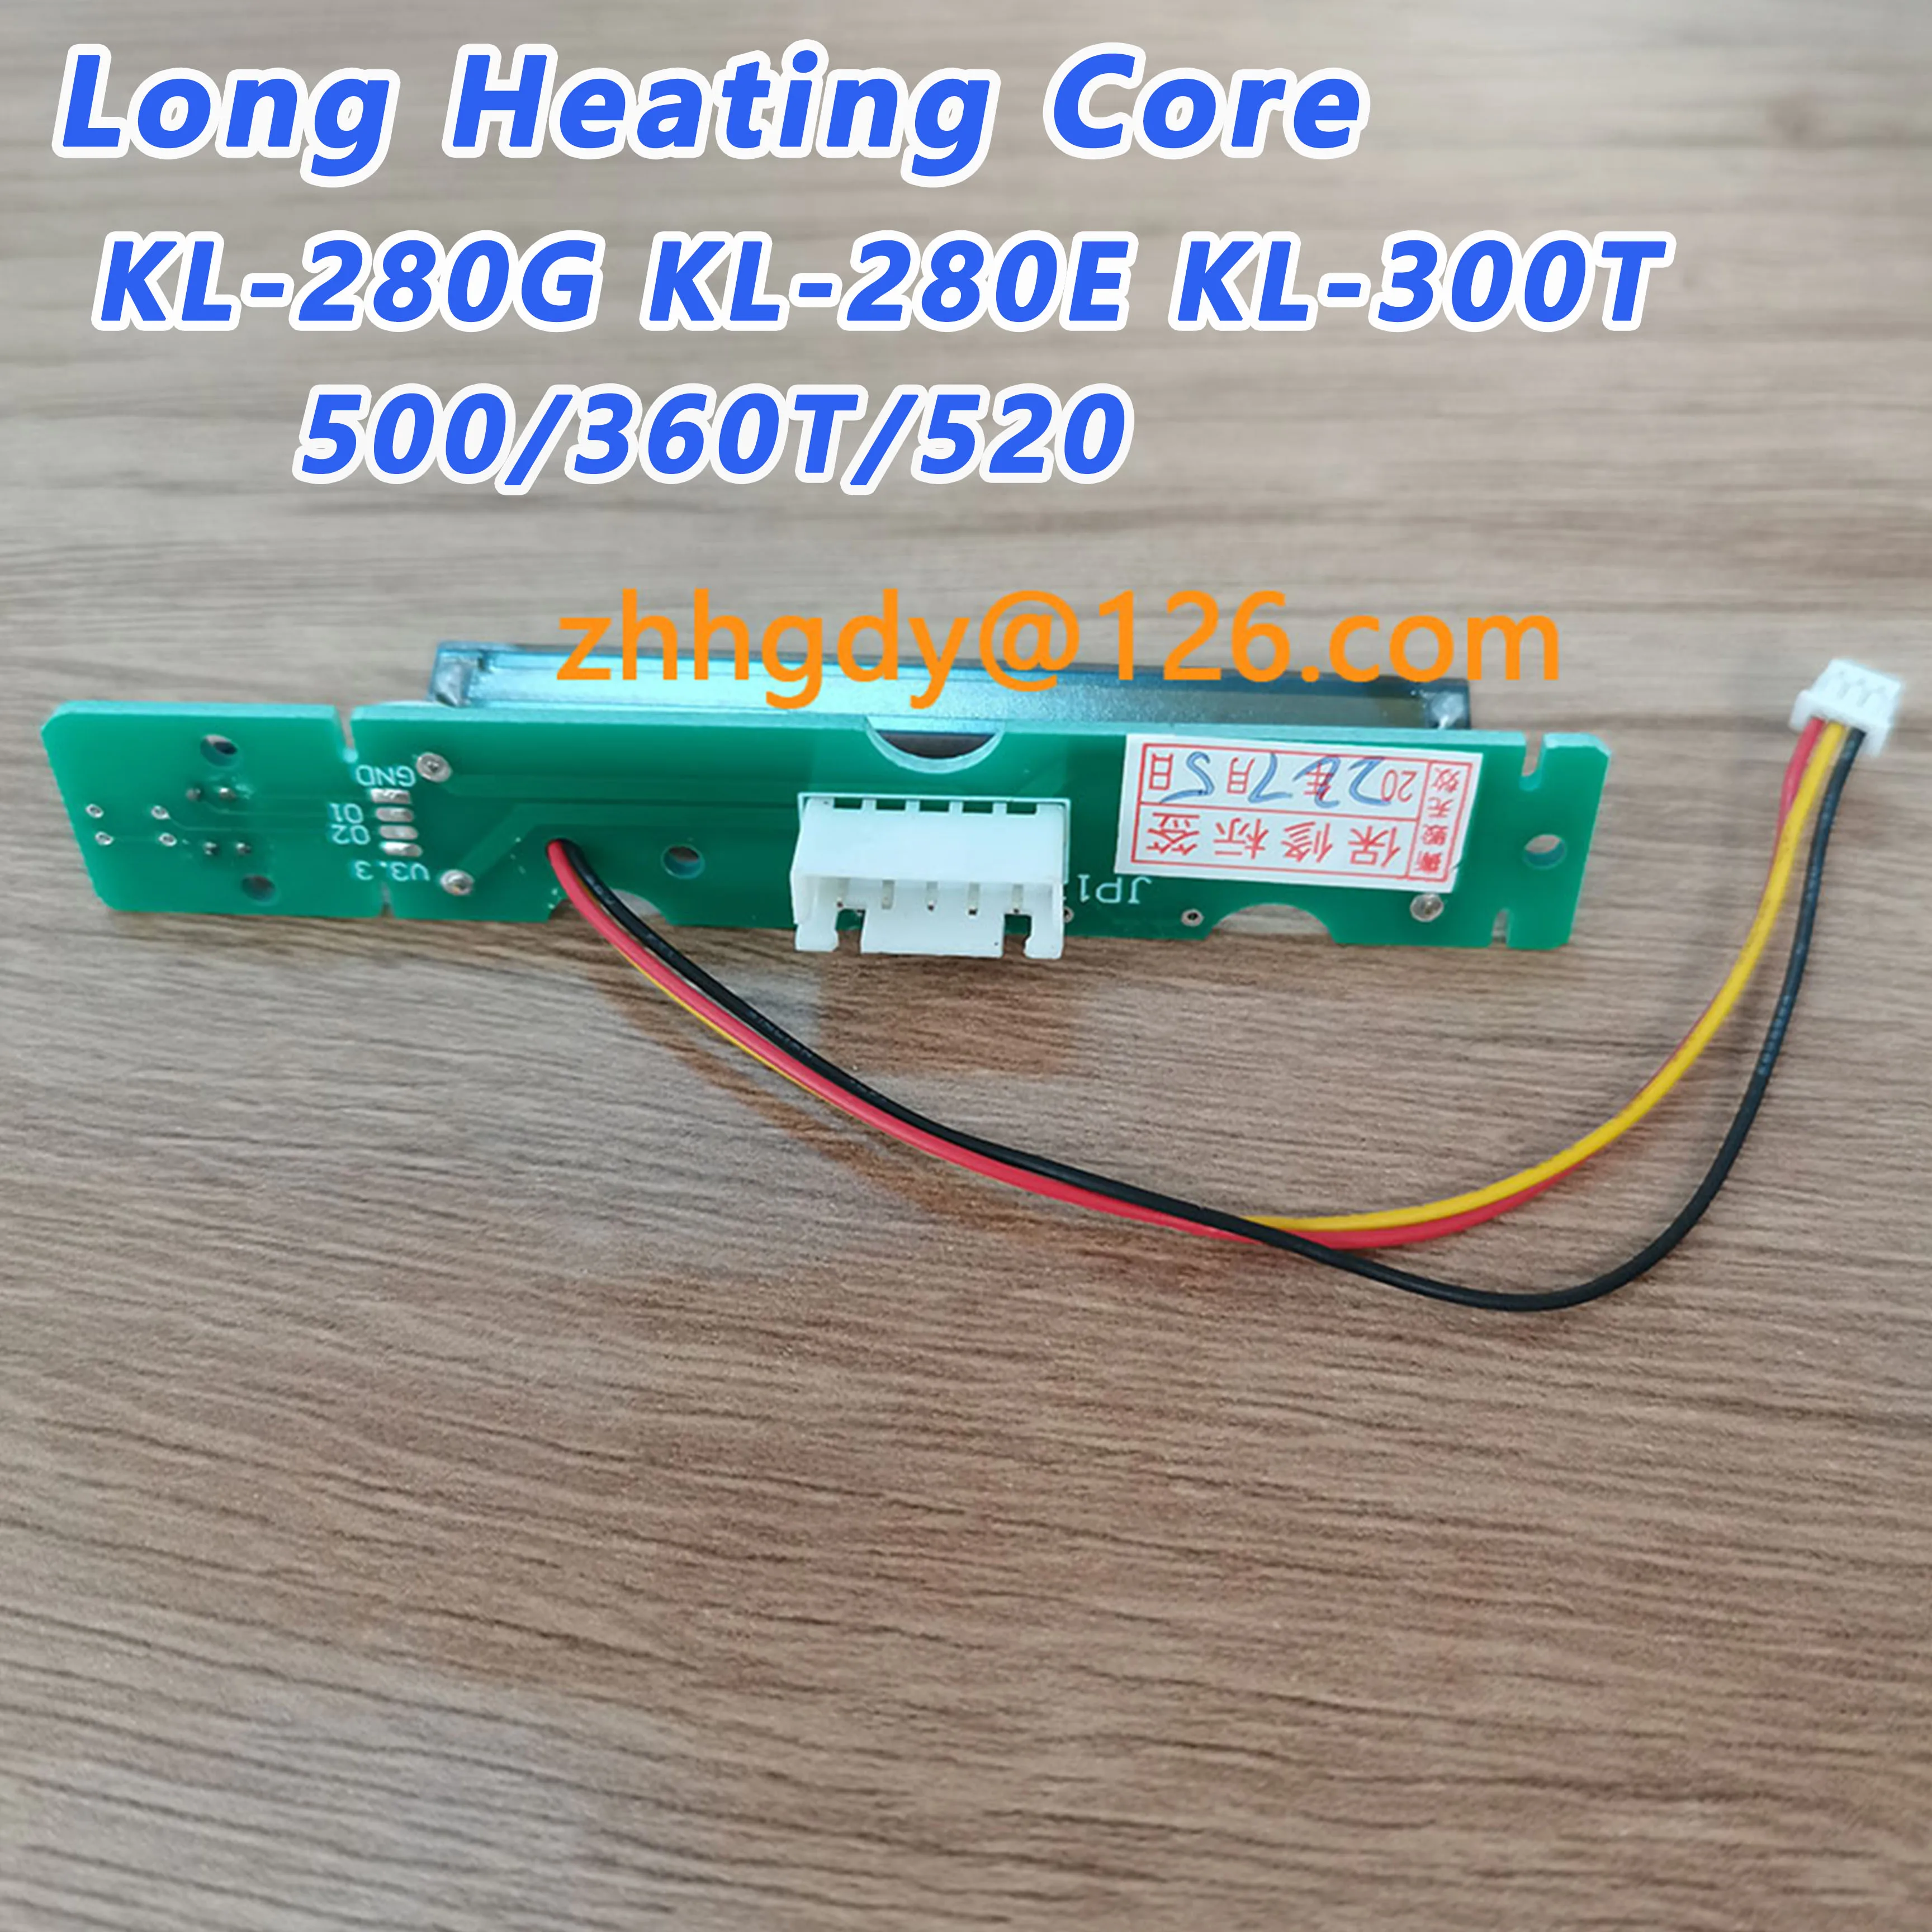 

Original Fiber Fusion Splicer Heating Core For Jilong KL-280G KL-280E KL-300T/500/360T/520 Extended Heater Furnace Core Long